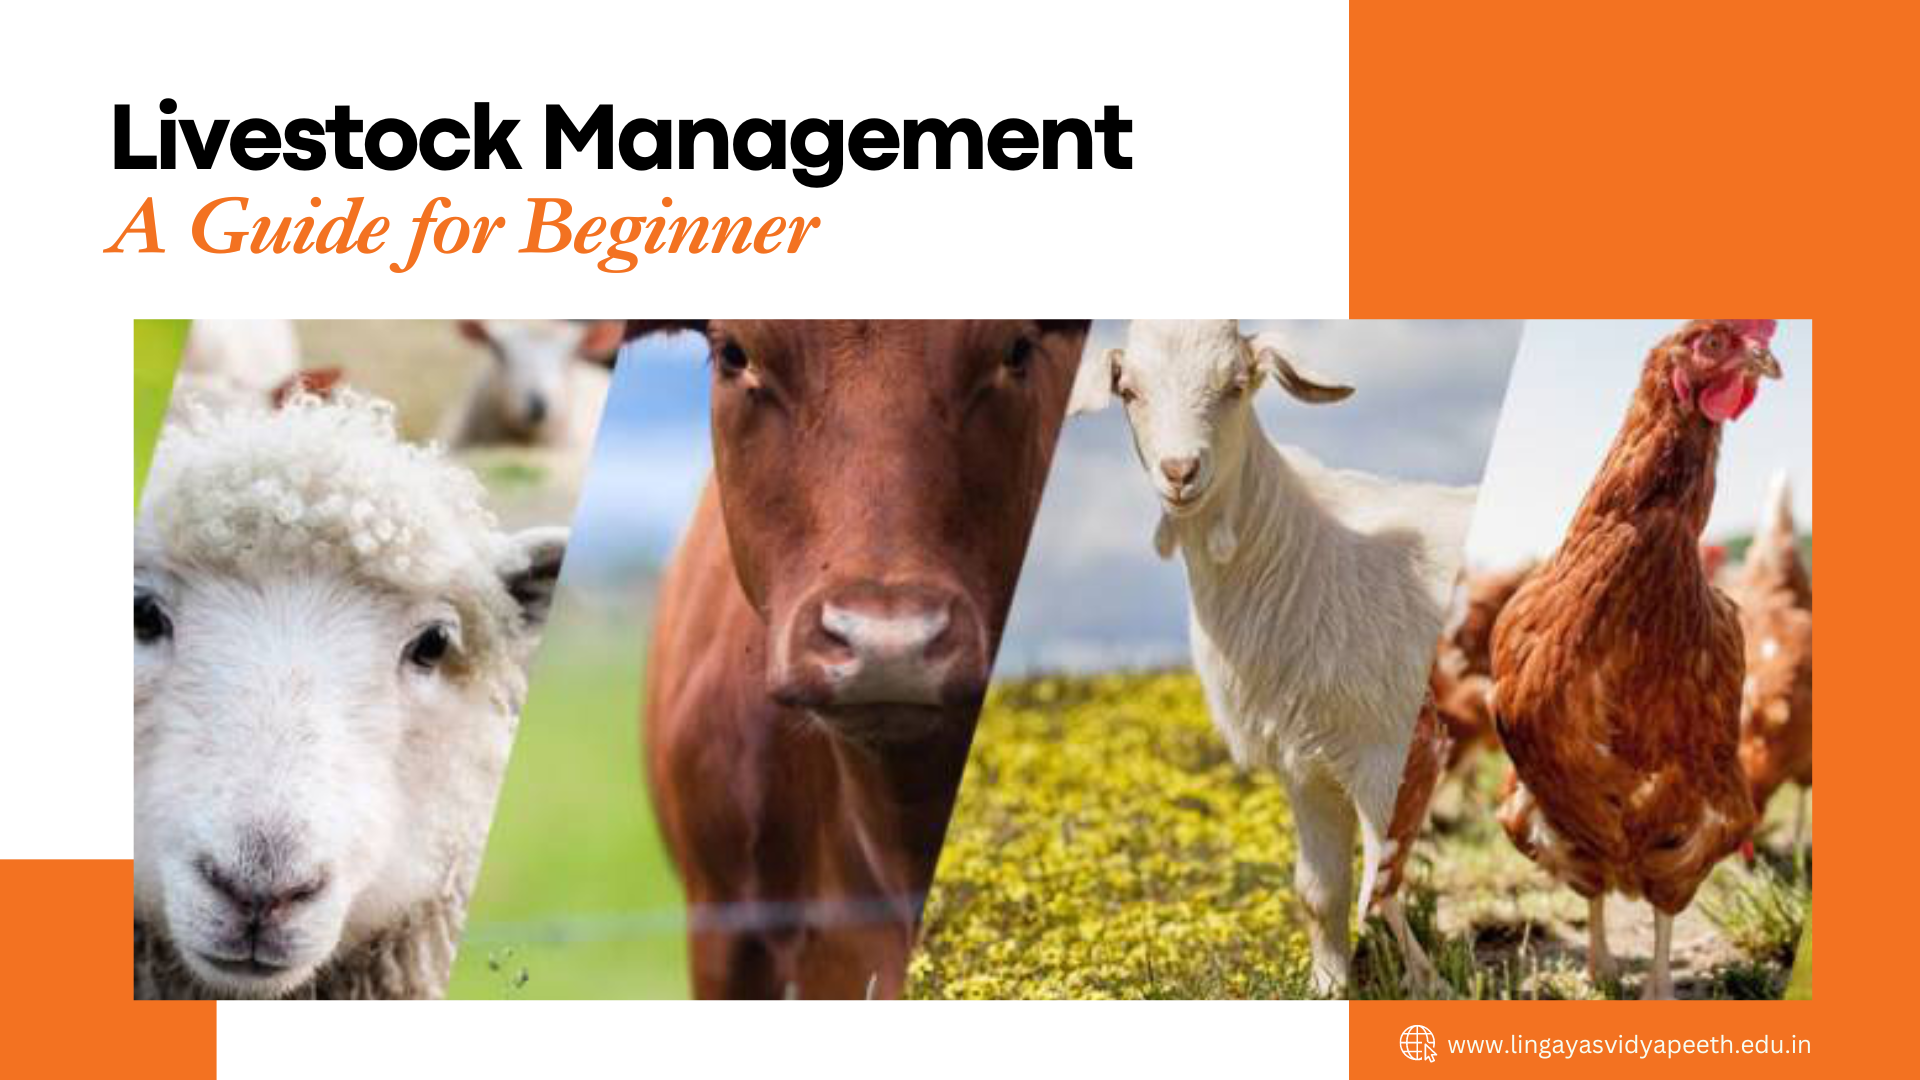 The Art of Livestock Management: A Guide for Beginner